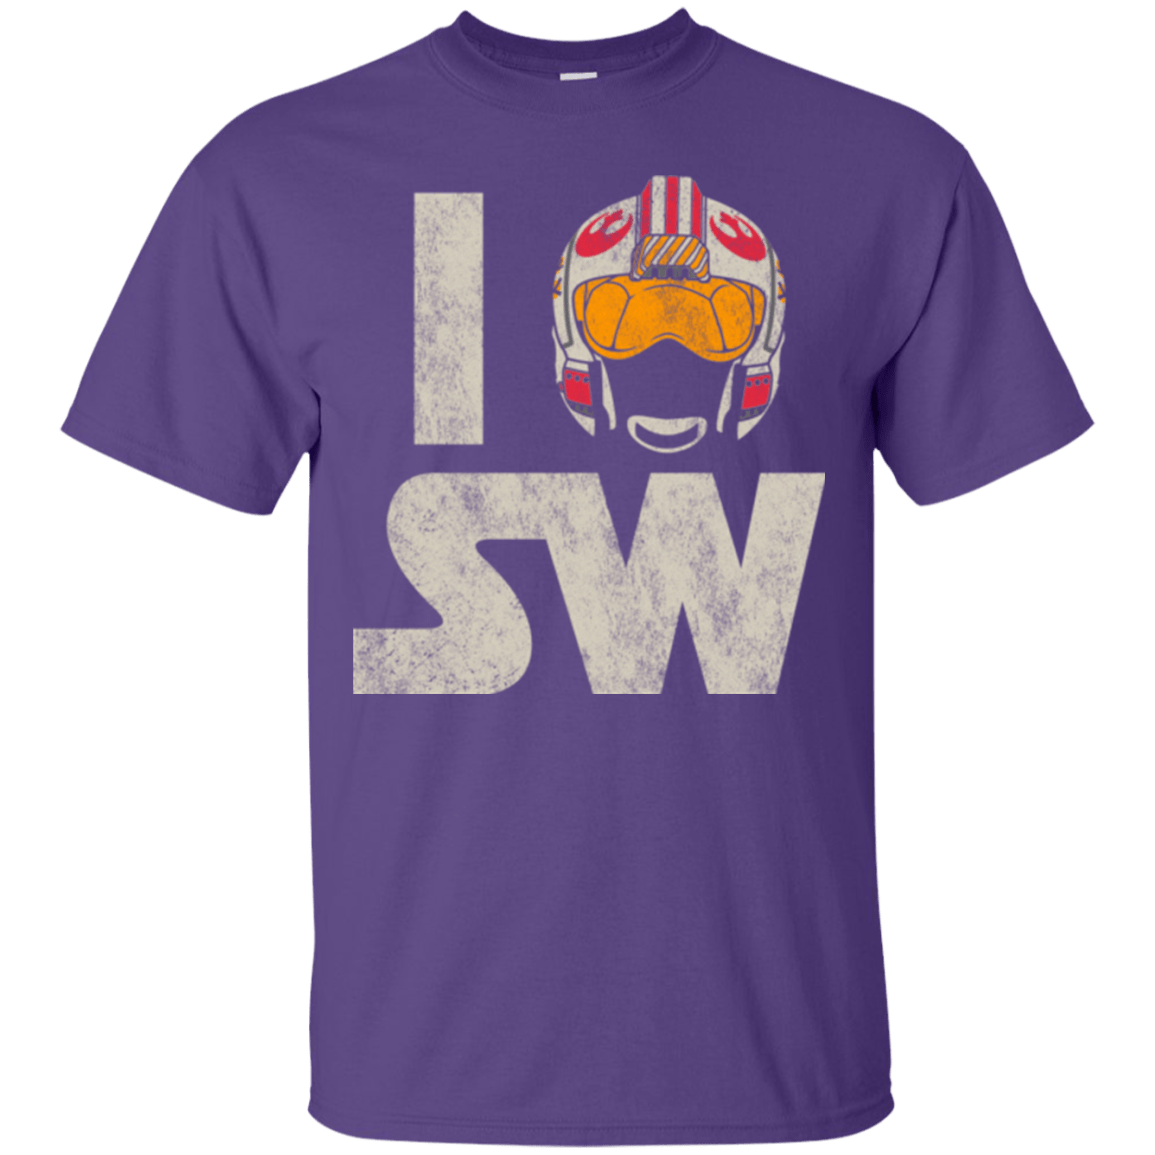 T-Shirts Purple / Small I Pilot SW T-Shirt